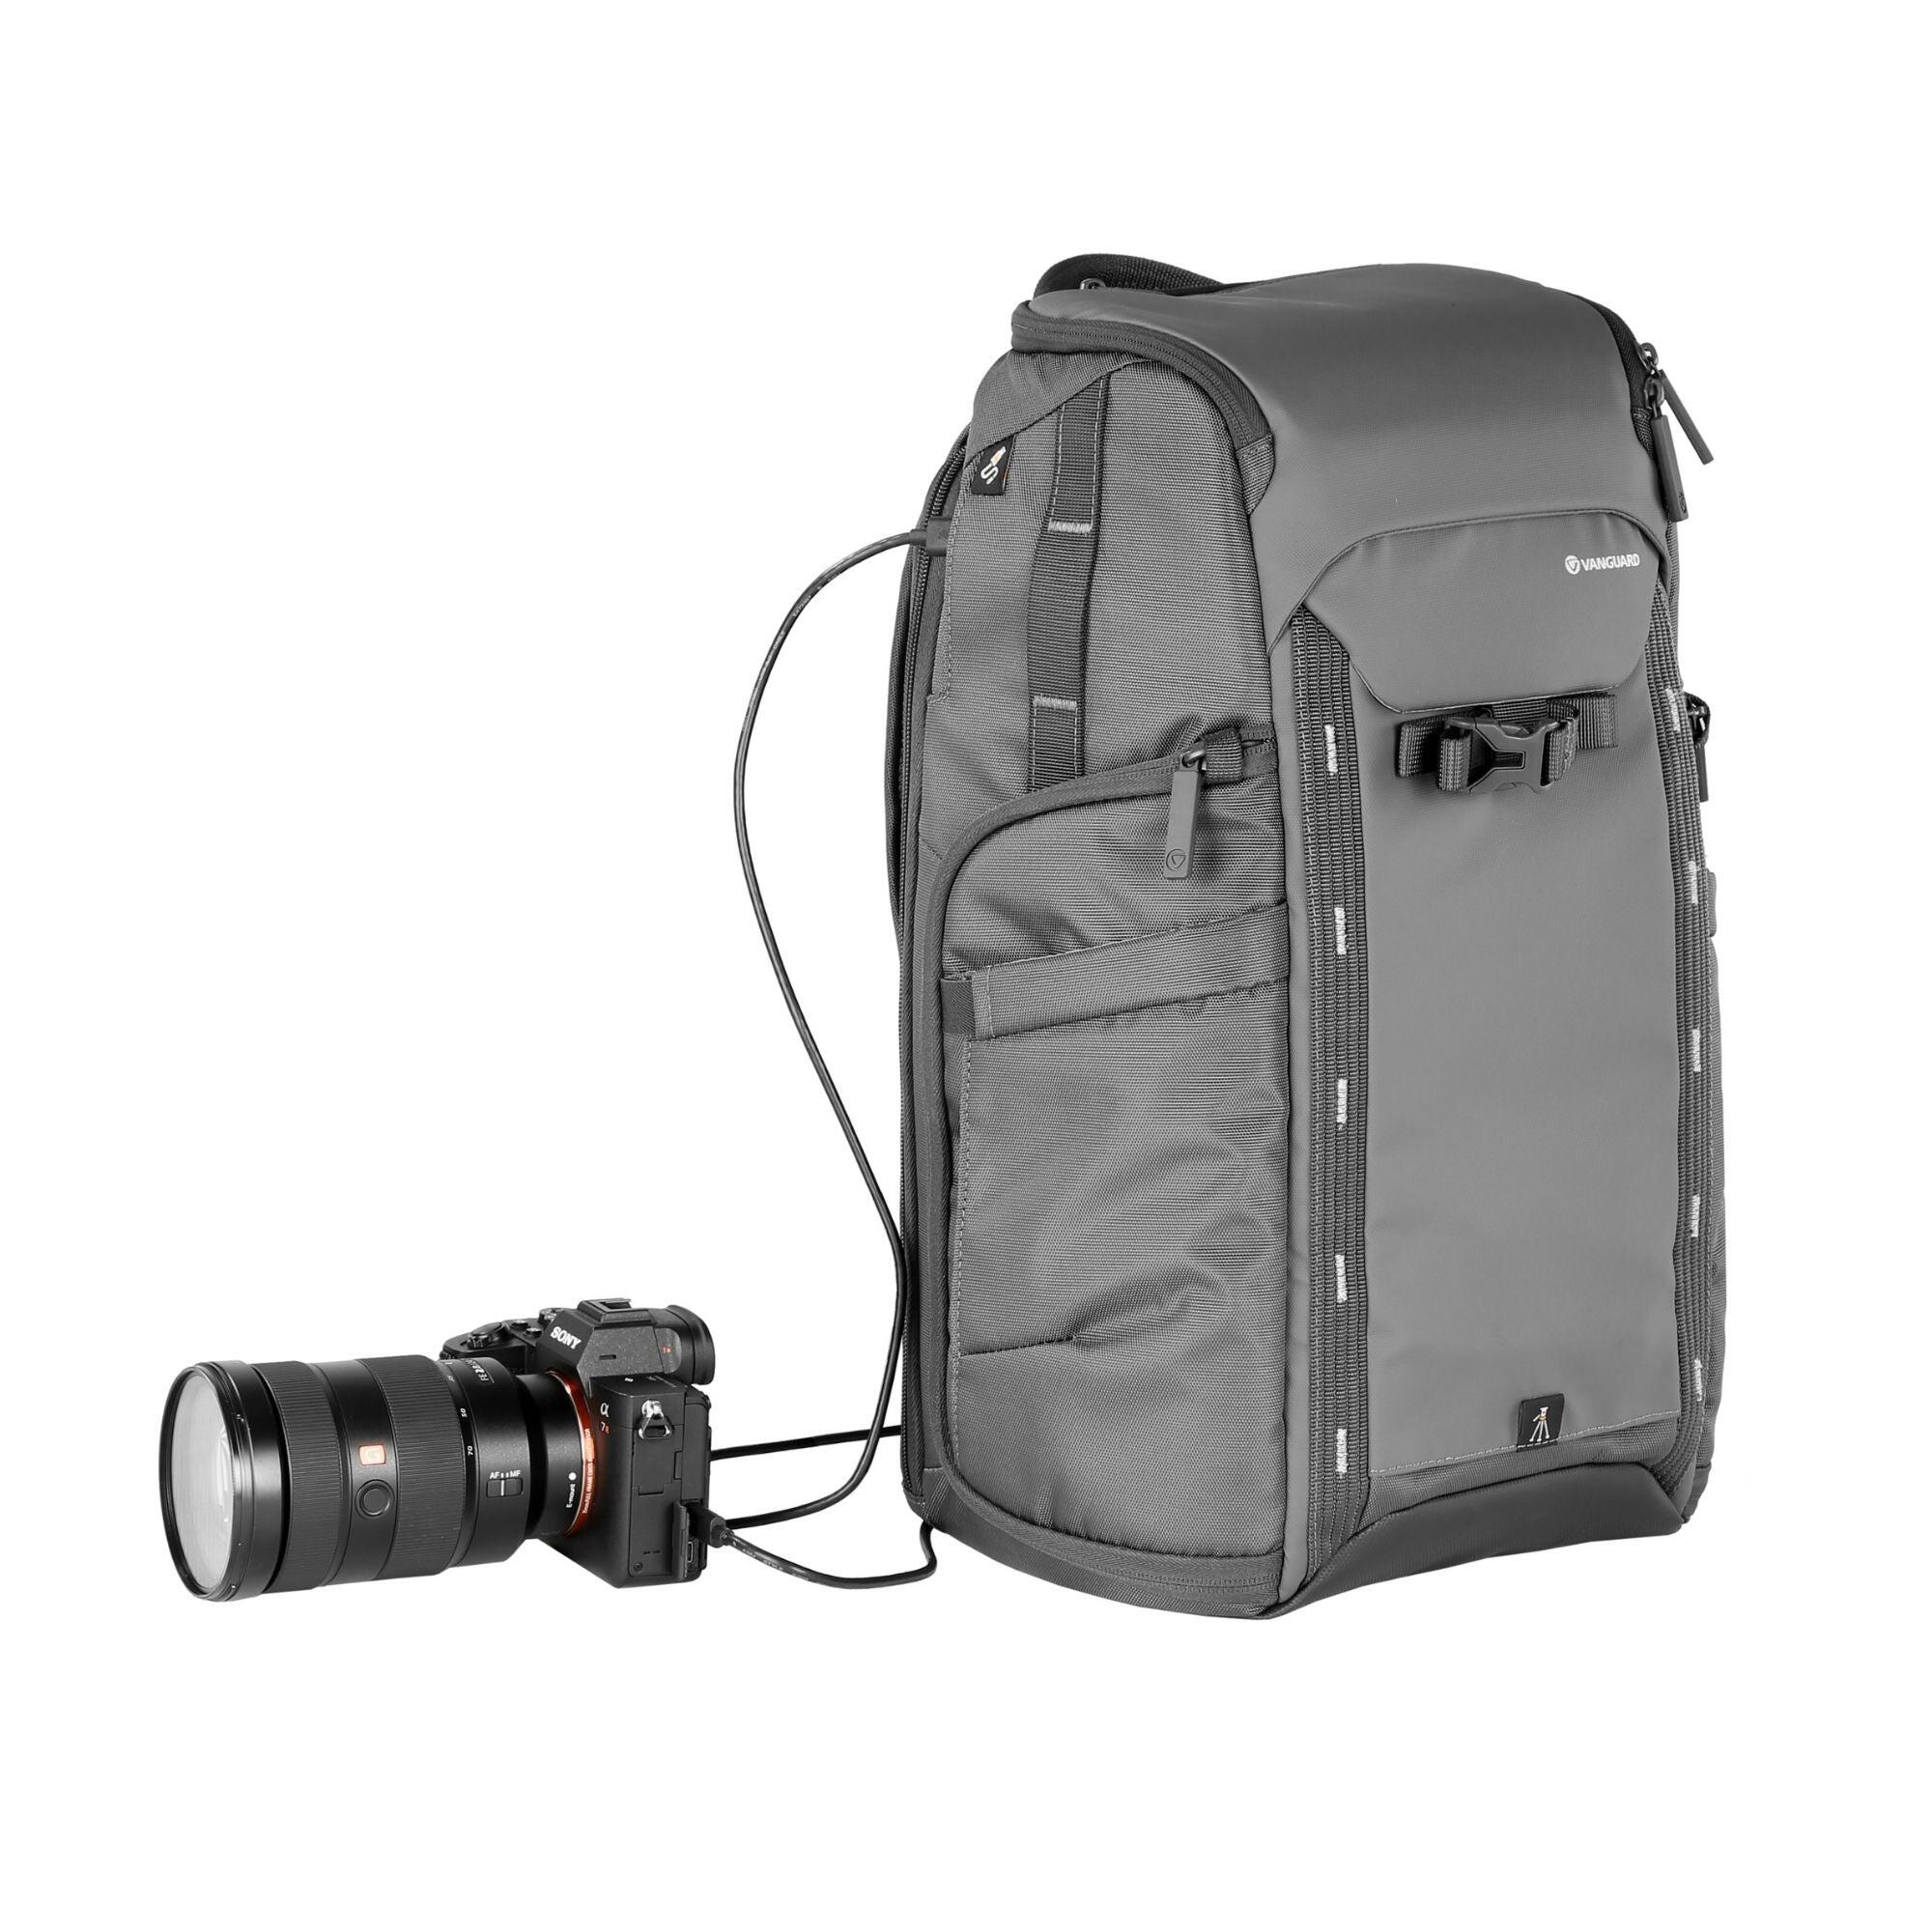 VANGUARD VEO ADAPTOR R44 GY Camera Backpack with USB Port - Grey